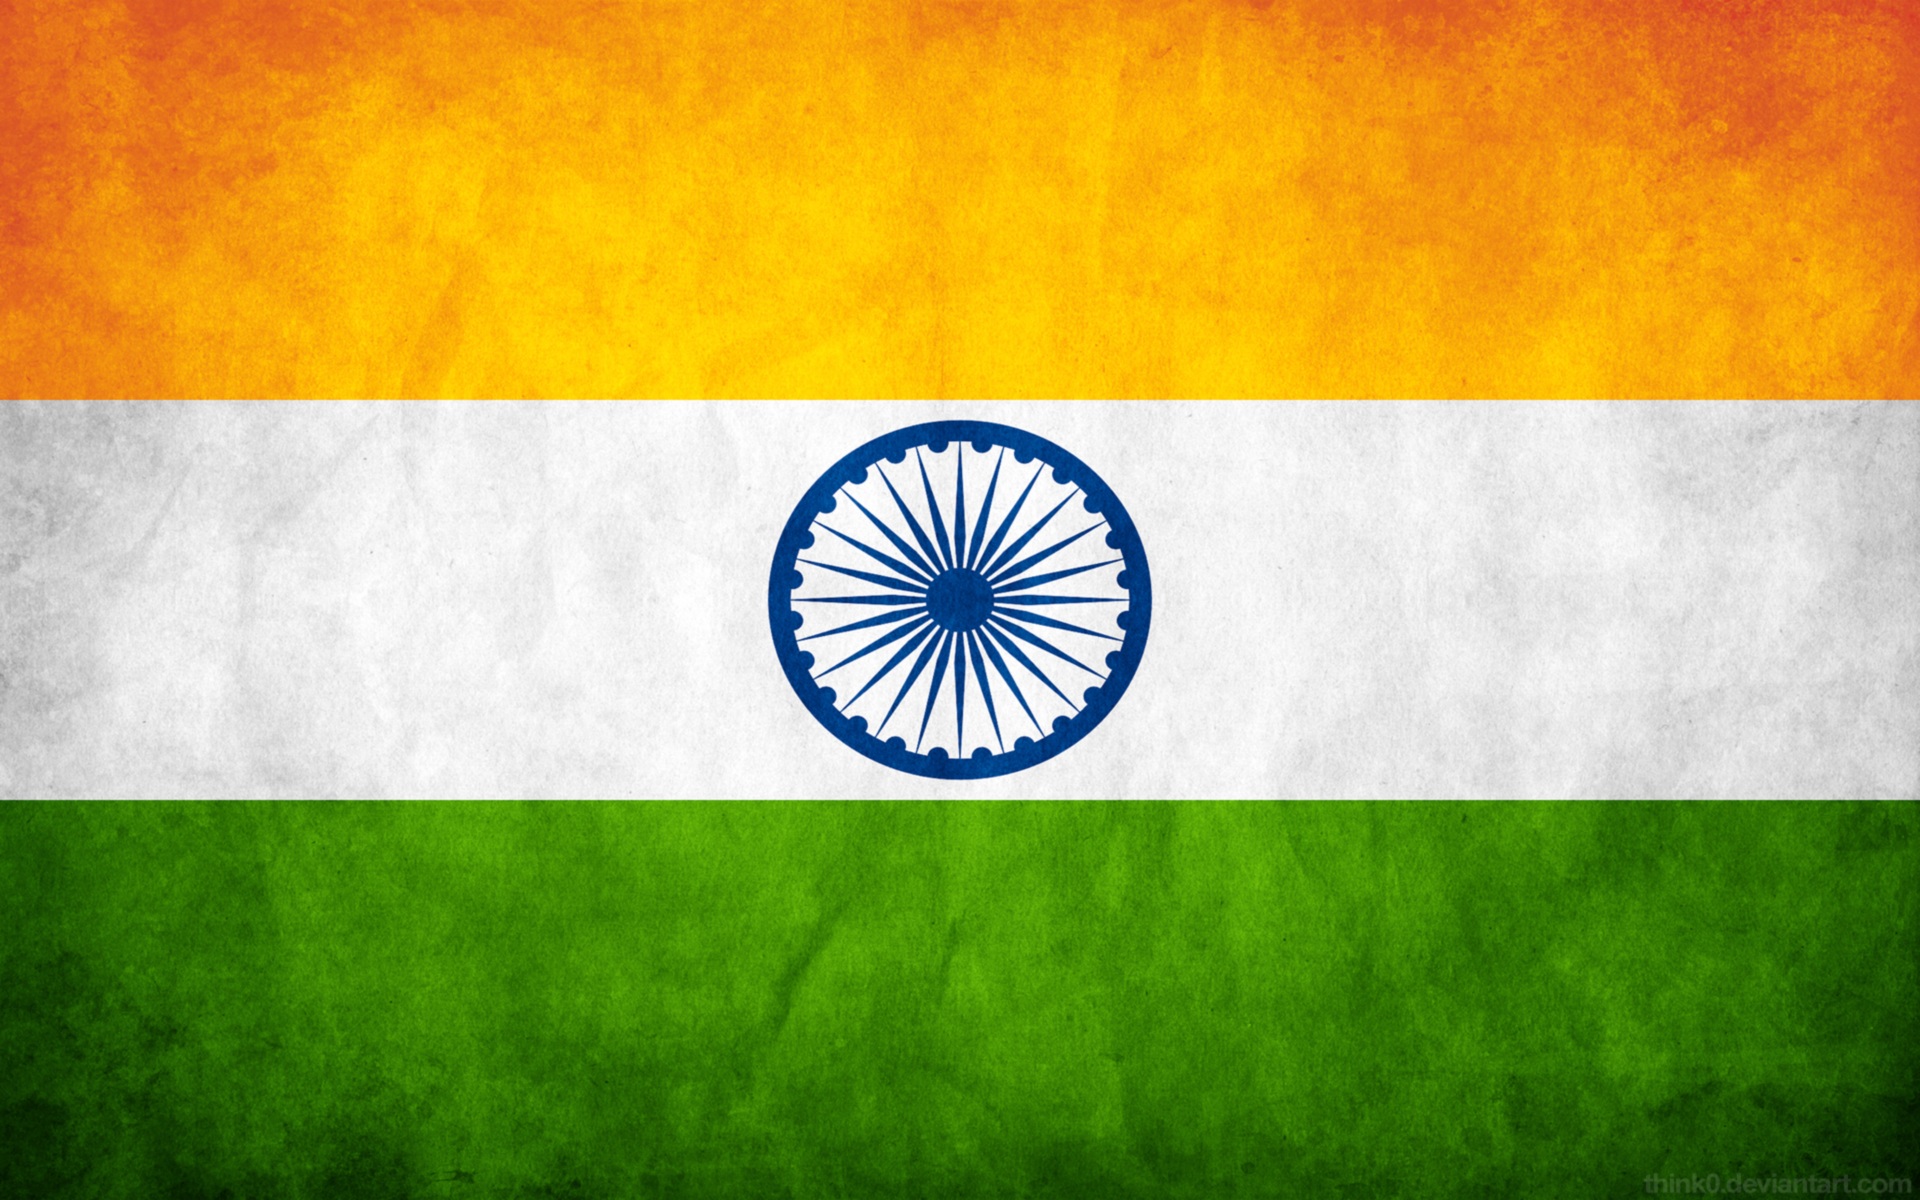 Indian Flag Wallpaper HD Image